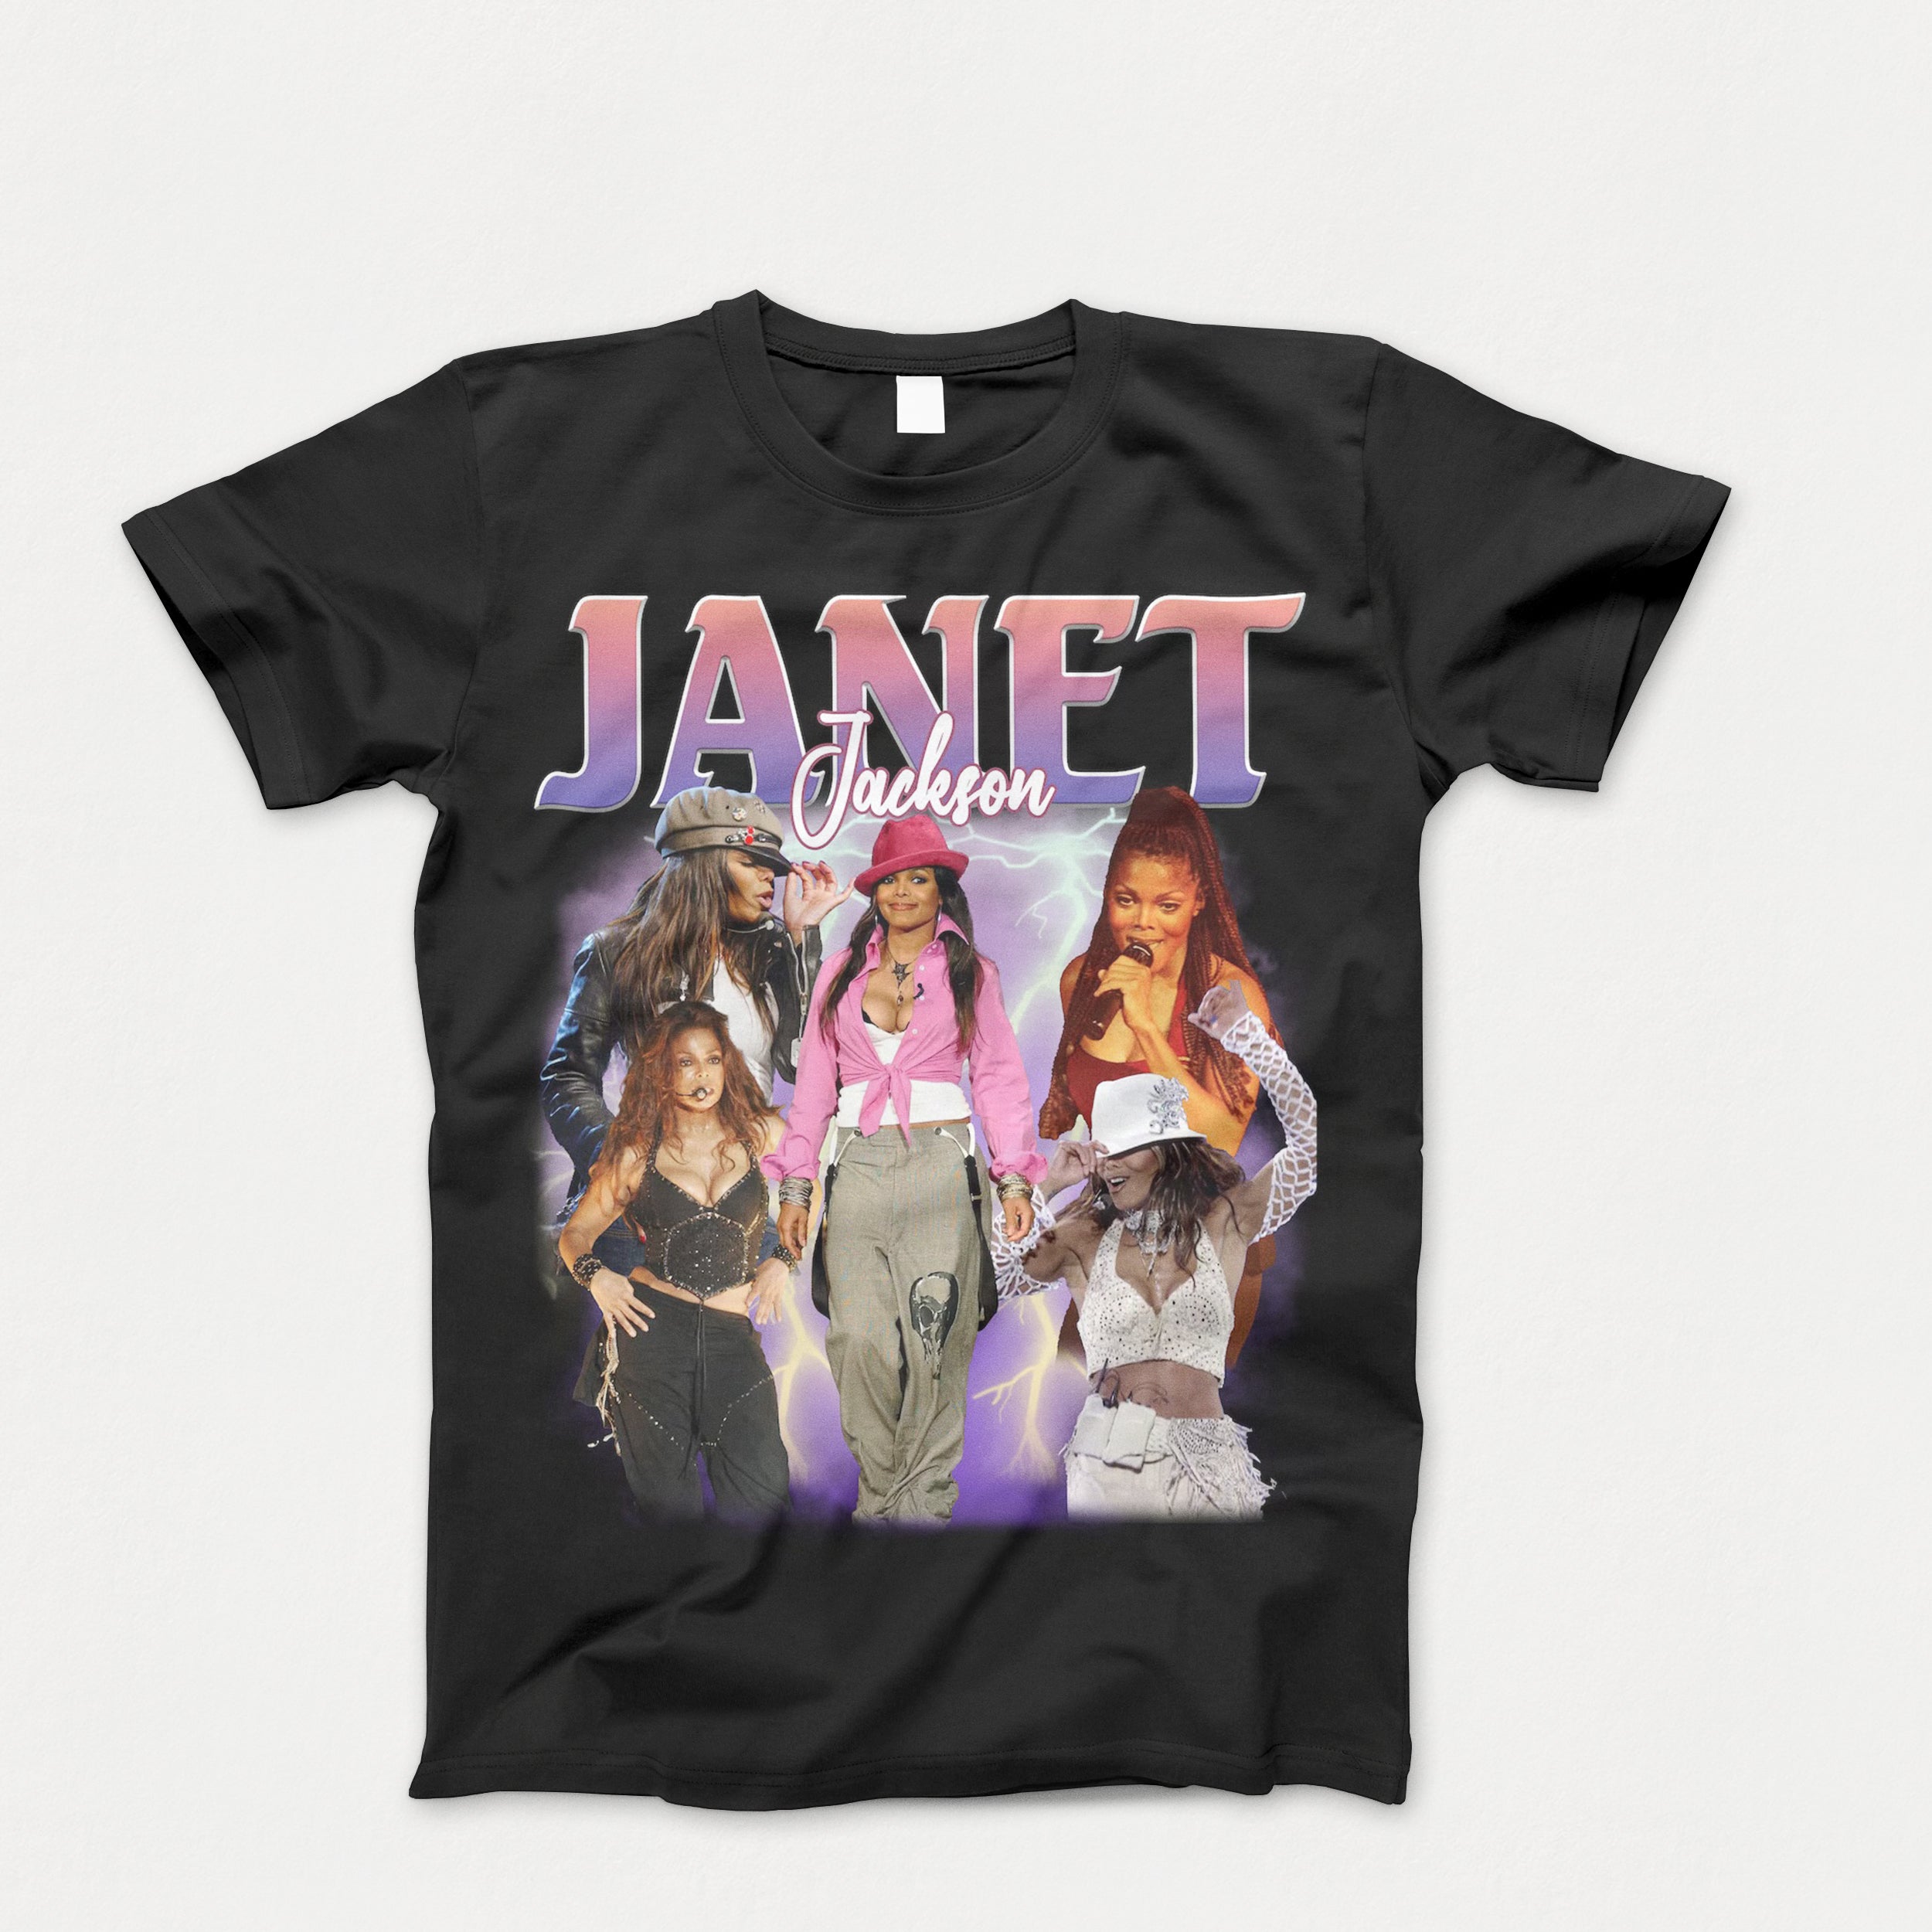 Kids Janet Jackson Tee Shirt